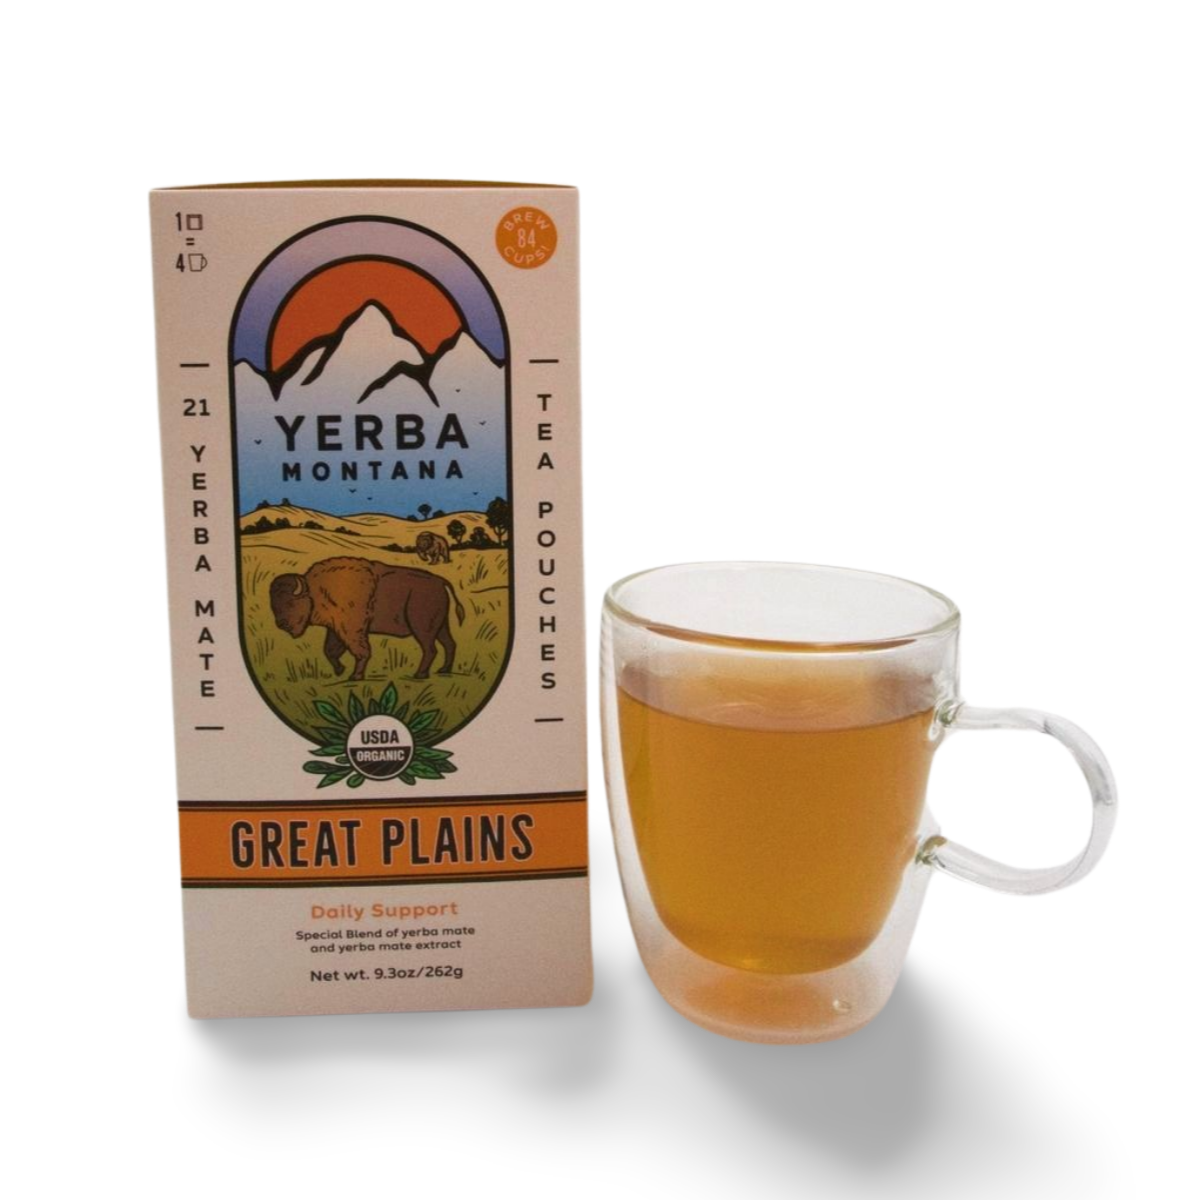 Great Plains Yerba mate tea pouch with hot yerba mate tea